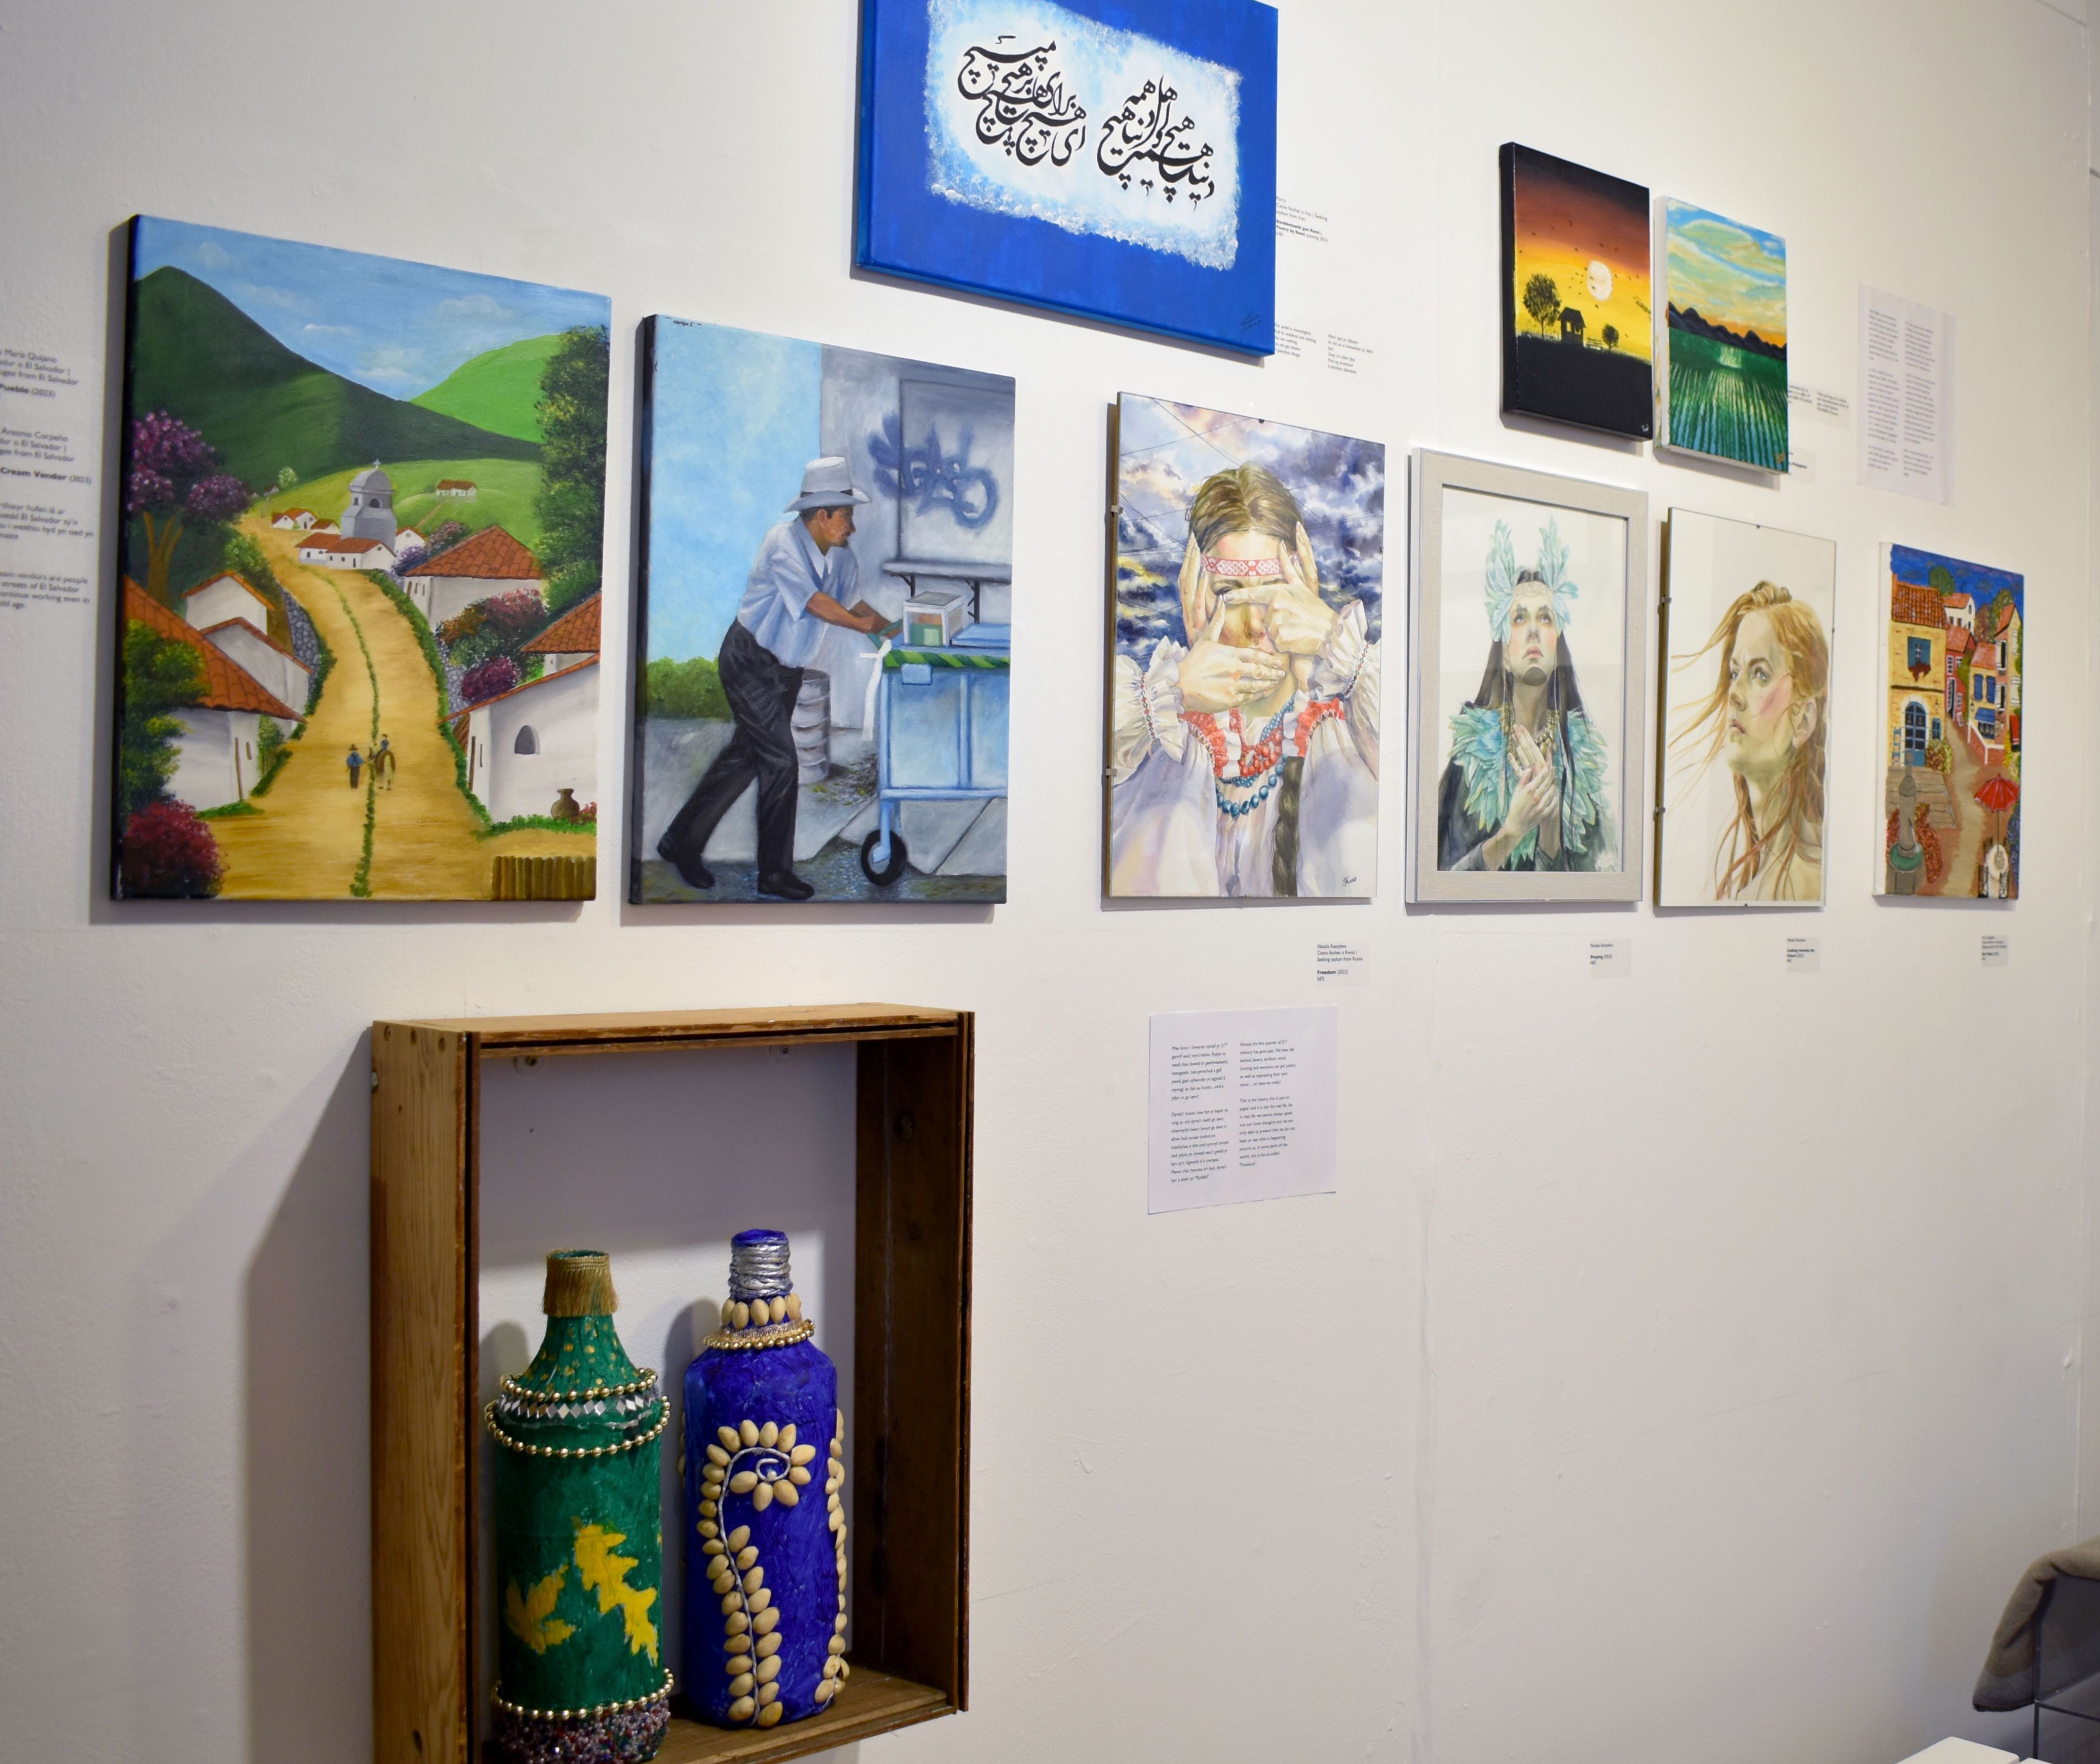 Install of The Wall - Home, Local artists seeking asylum in Swansea